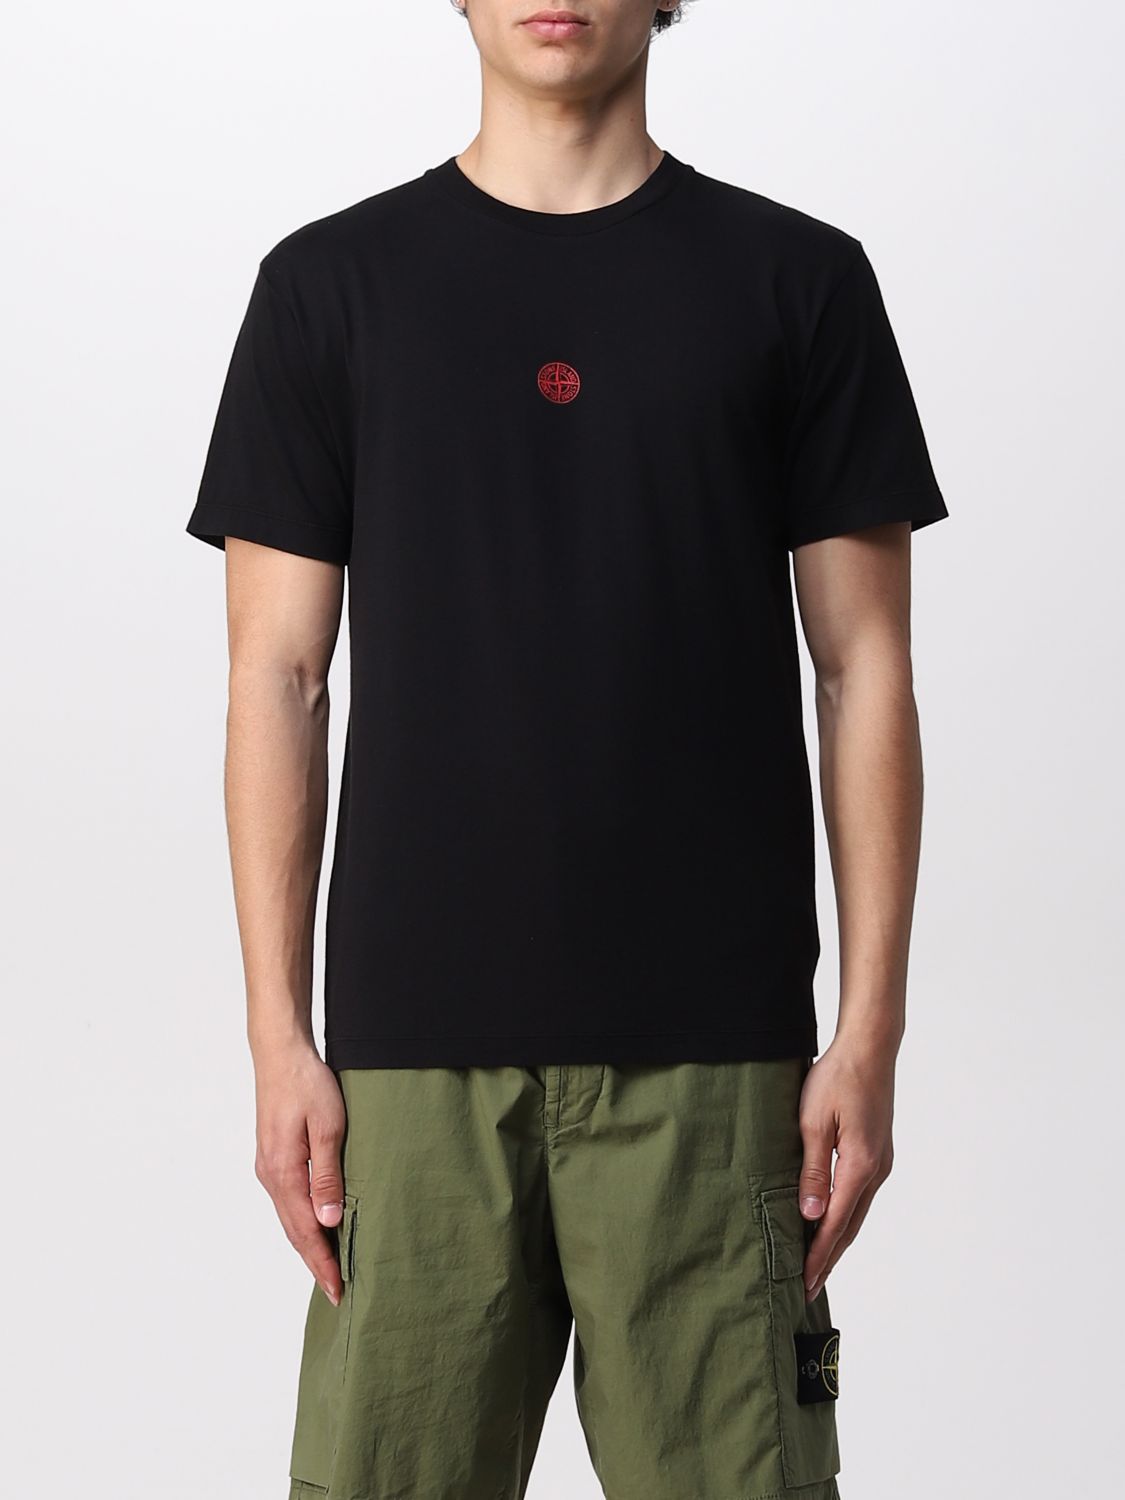 STONE ISLAND: Solar Eclipse Three t-shirt in cotton - Black | Stone ...